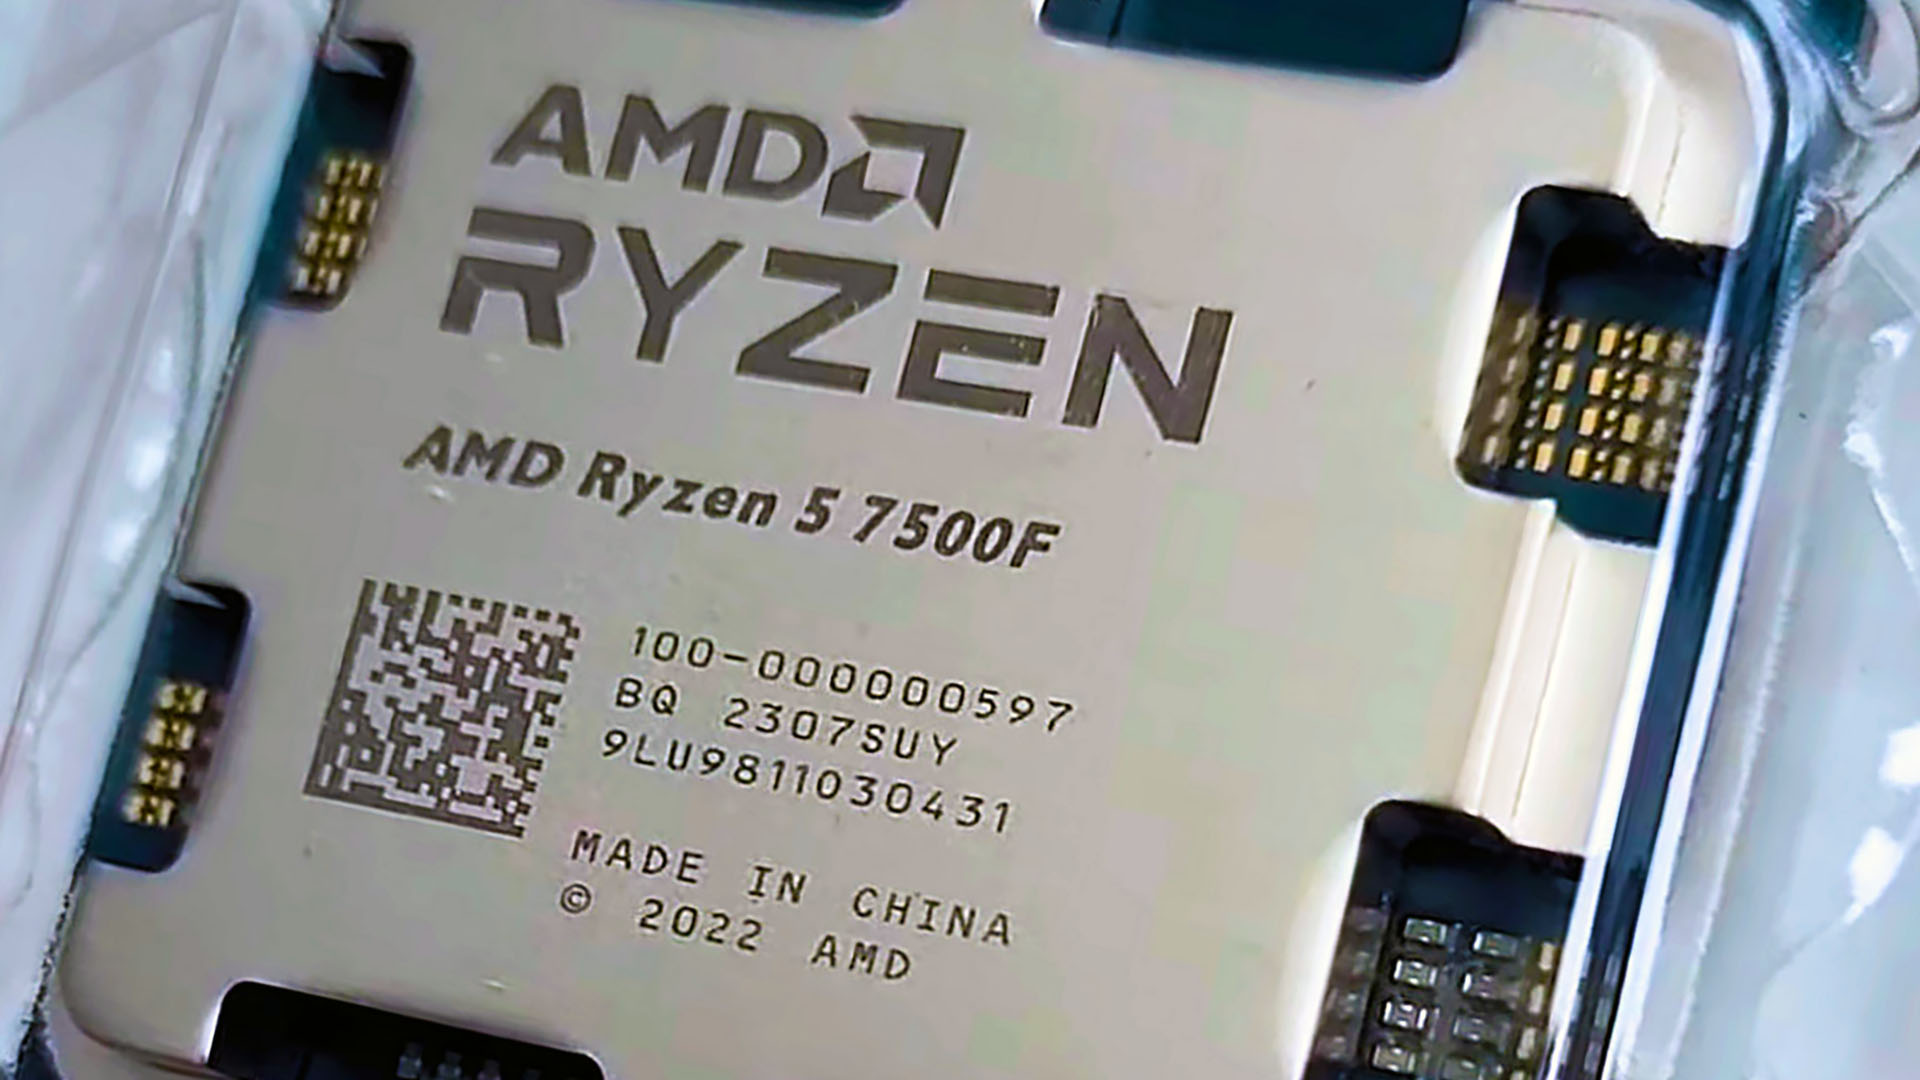 AMD Ryzen 5 7500F specs, price, release date rumors